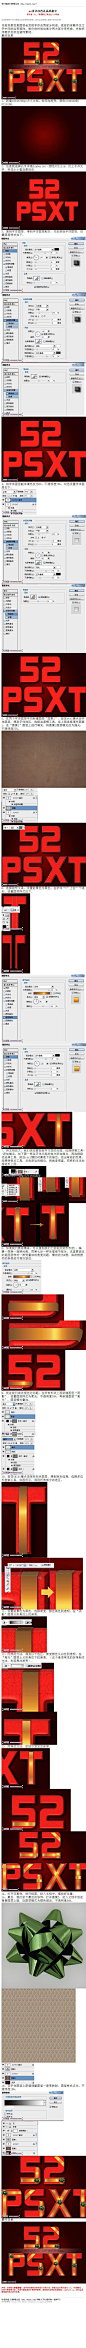 #ps教程##I抠冰块I#《ps设计红色礼品风格字》 仔细观察效果图就会发现字体由两部分构成。底部的浮雕字及文字中间的丝带装饰。制作的时候也是分两大部分来完成，先做好浮雕字后添加装饰素材。 #ps##photoshop##教程#：http://www.16xx8.com/plus/view.php?aid=109698&pageno=all